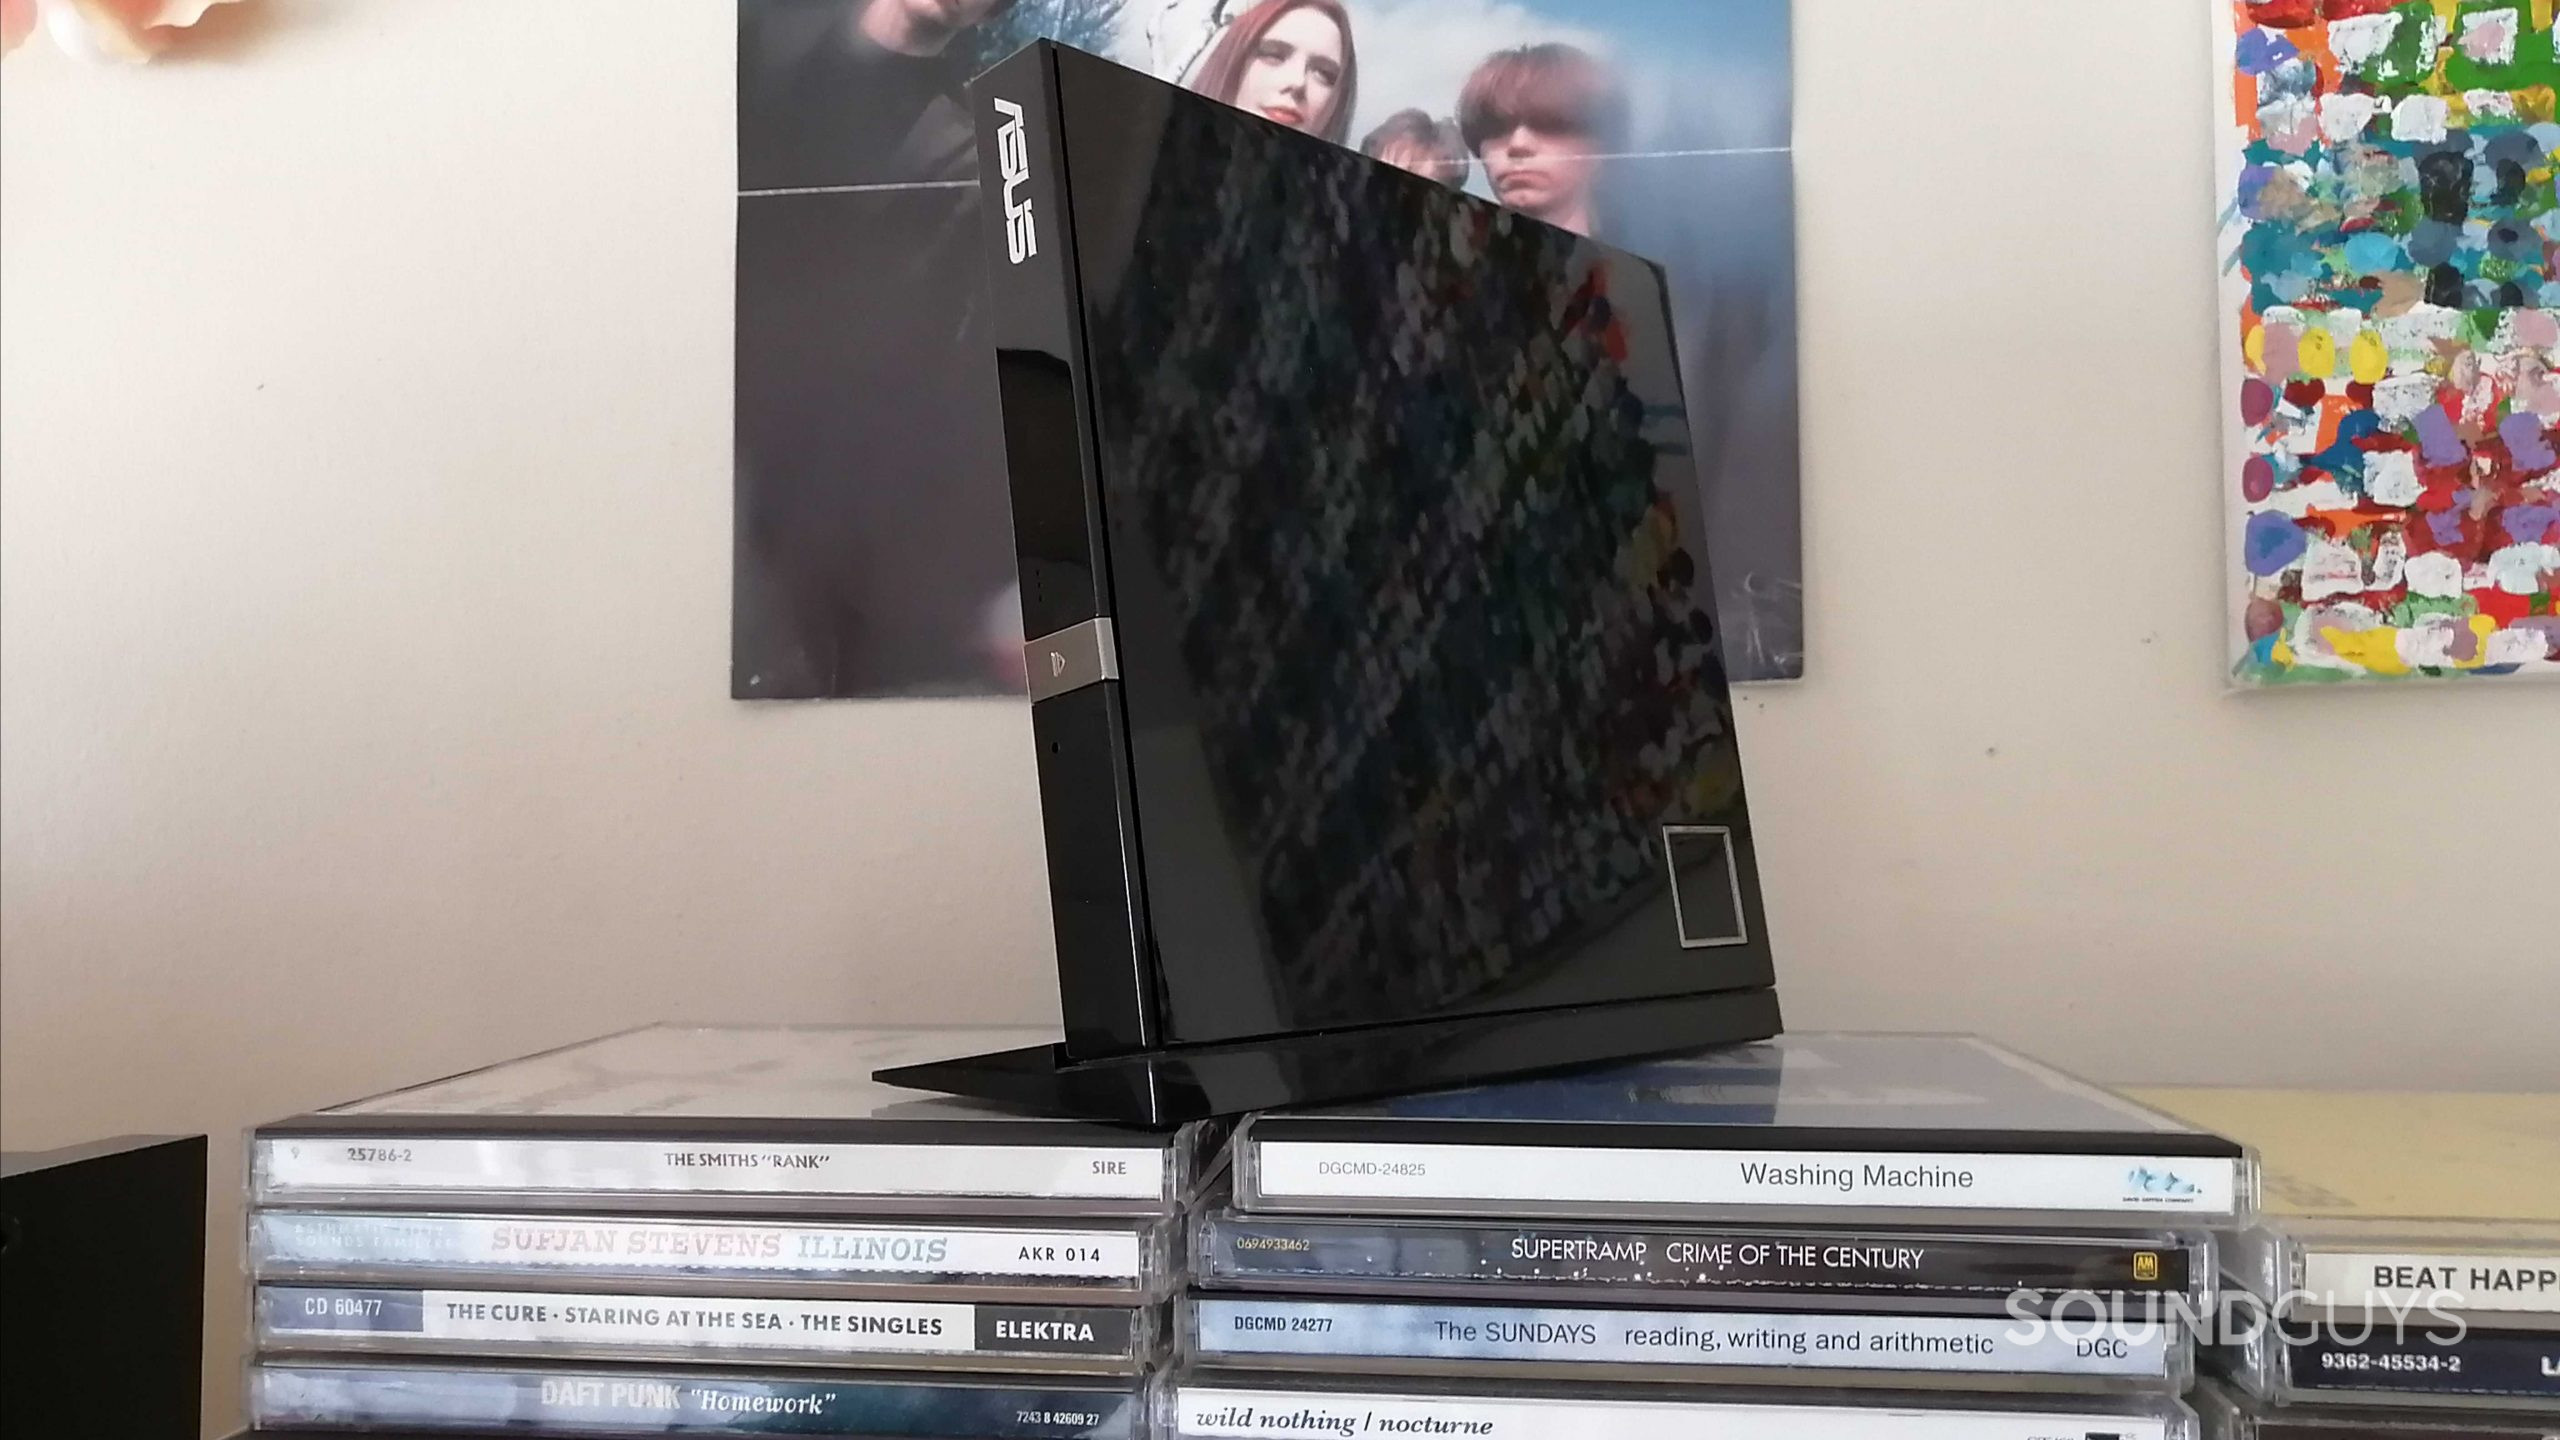 An external Blu-ray/DVD/CD drive on top of several CDs.